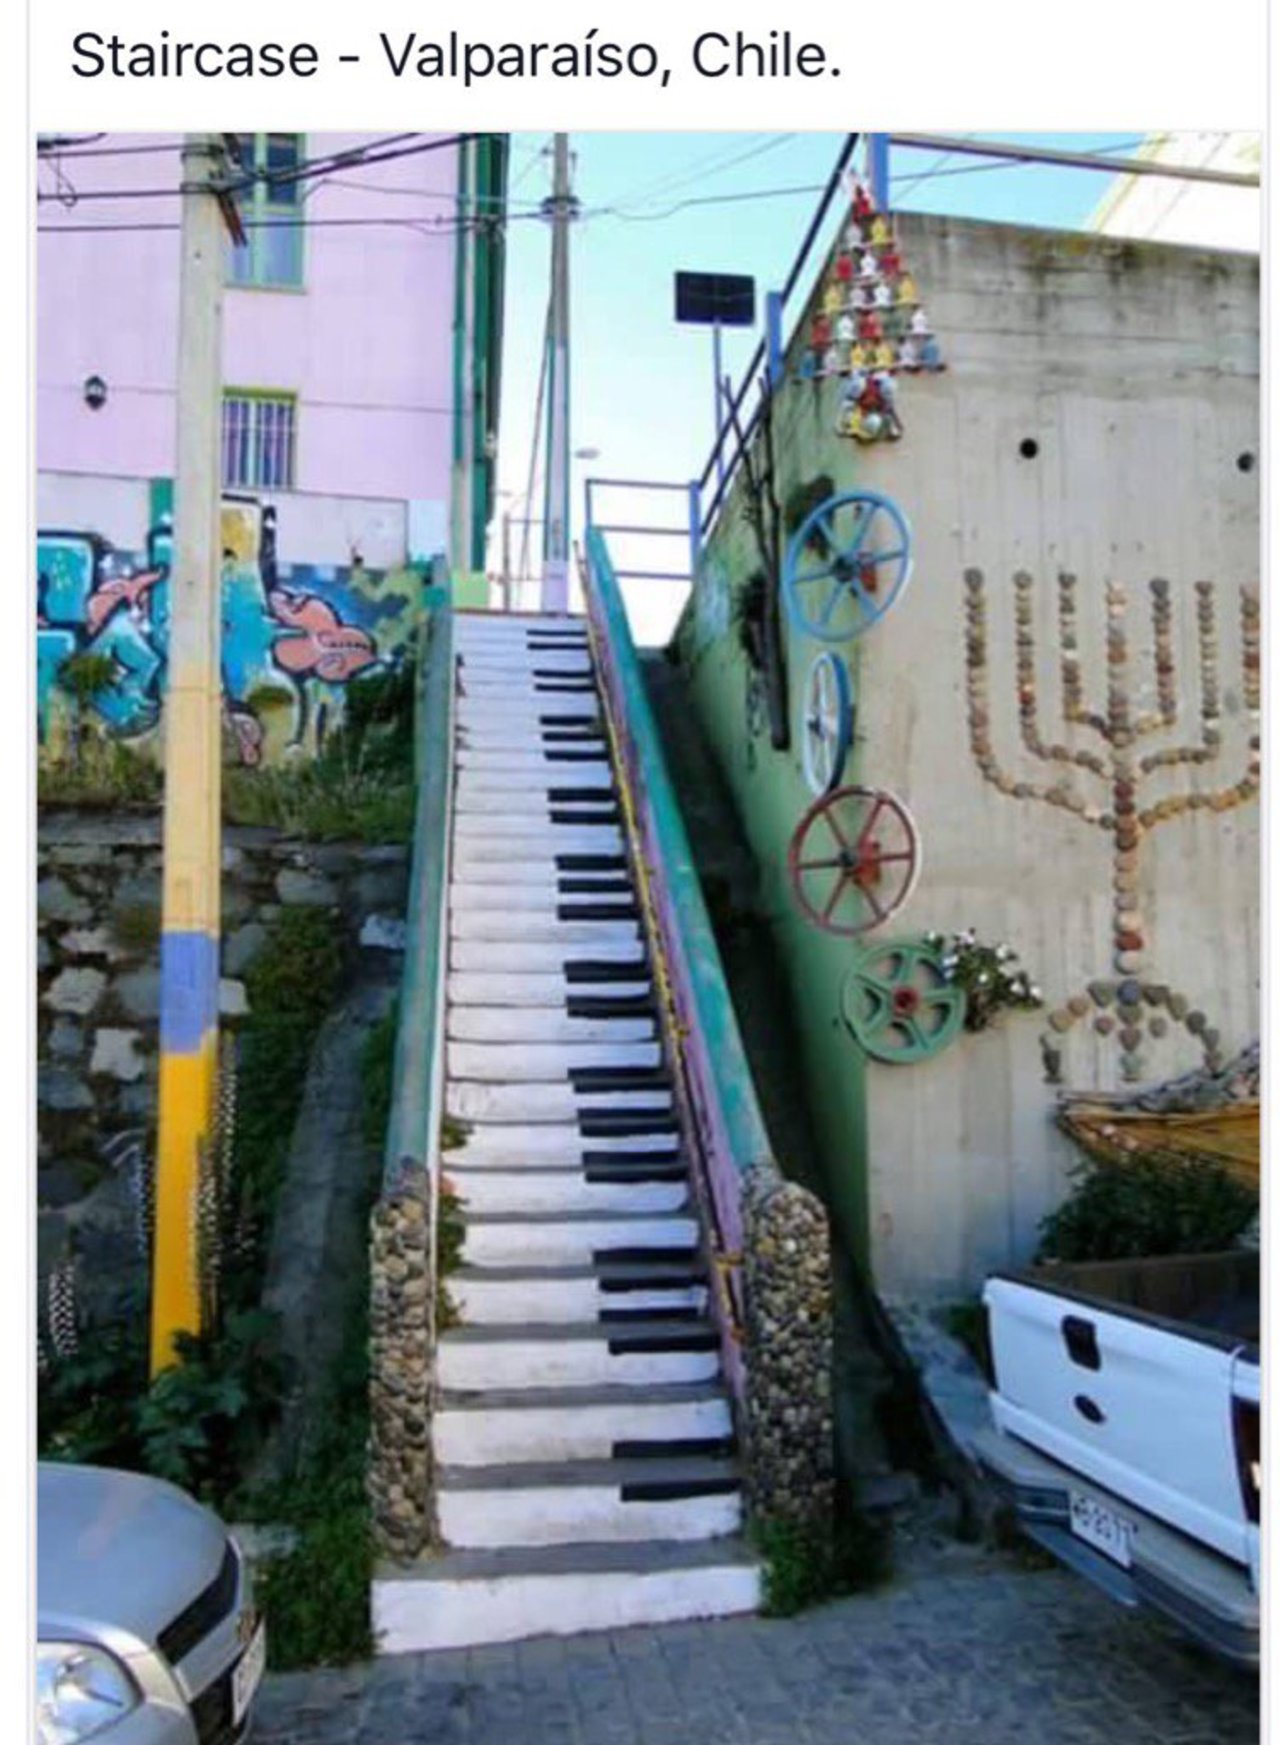 RT @playinglesshurt: #piano #staircase @PianistTweet@TLPiano @pianobug @pianoaddictblog via @ClassicFM https://t.co/DdsG7cJ5Ky